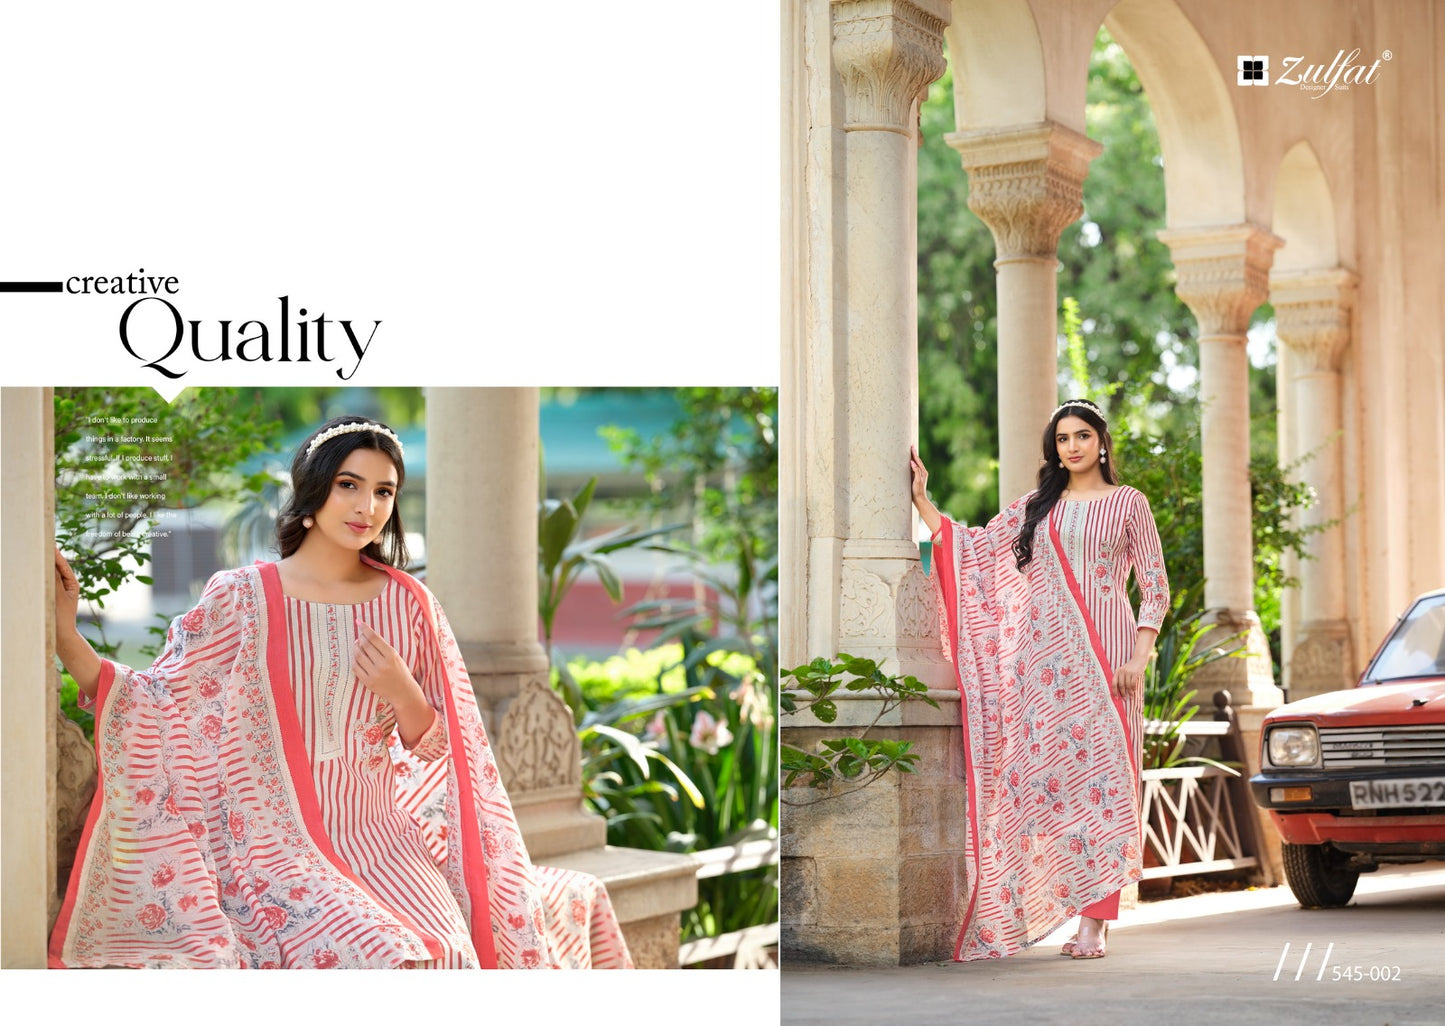 Farhana Vol 5 Zulfat Designer Pure Cotton Pant Style Suits Exporter India